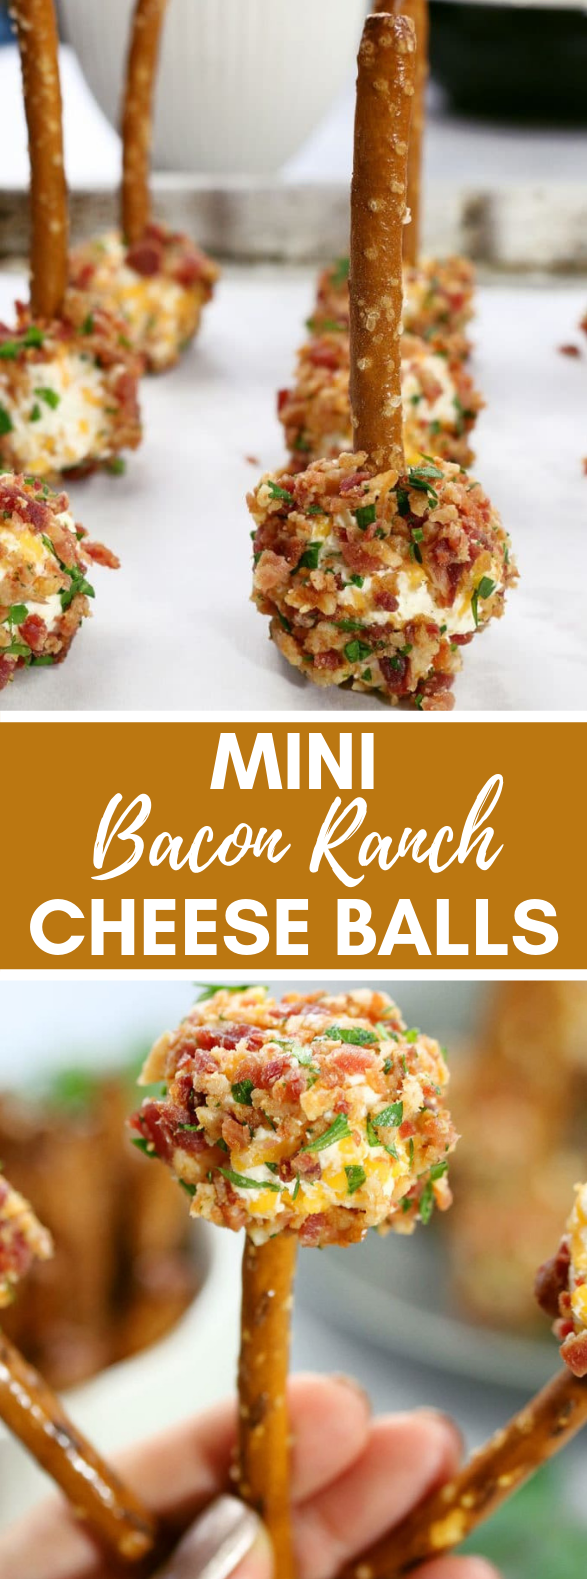 MINI BACON RANCH CHEESE BALL RECIPE #appetizer #brunch